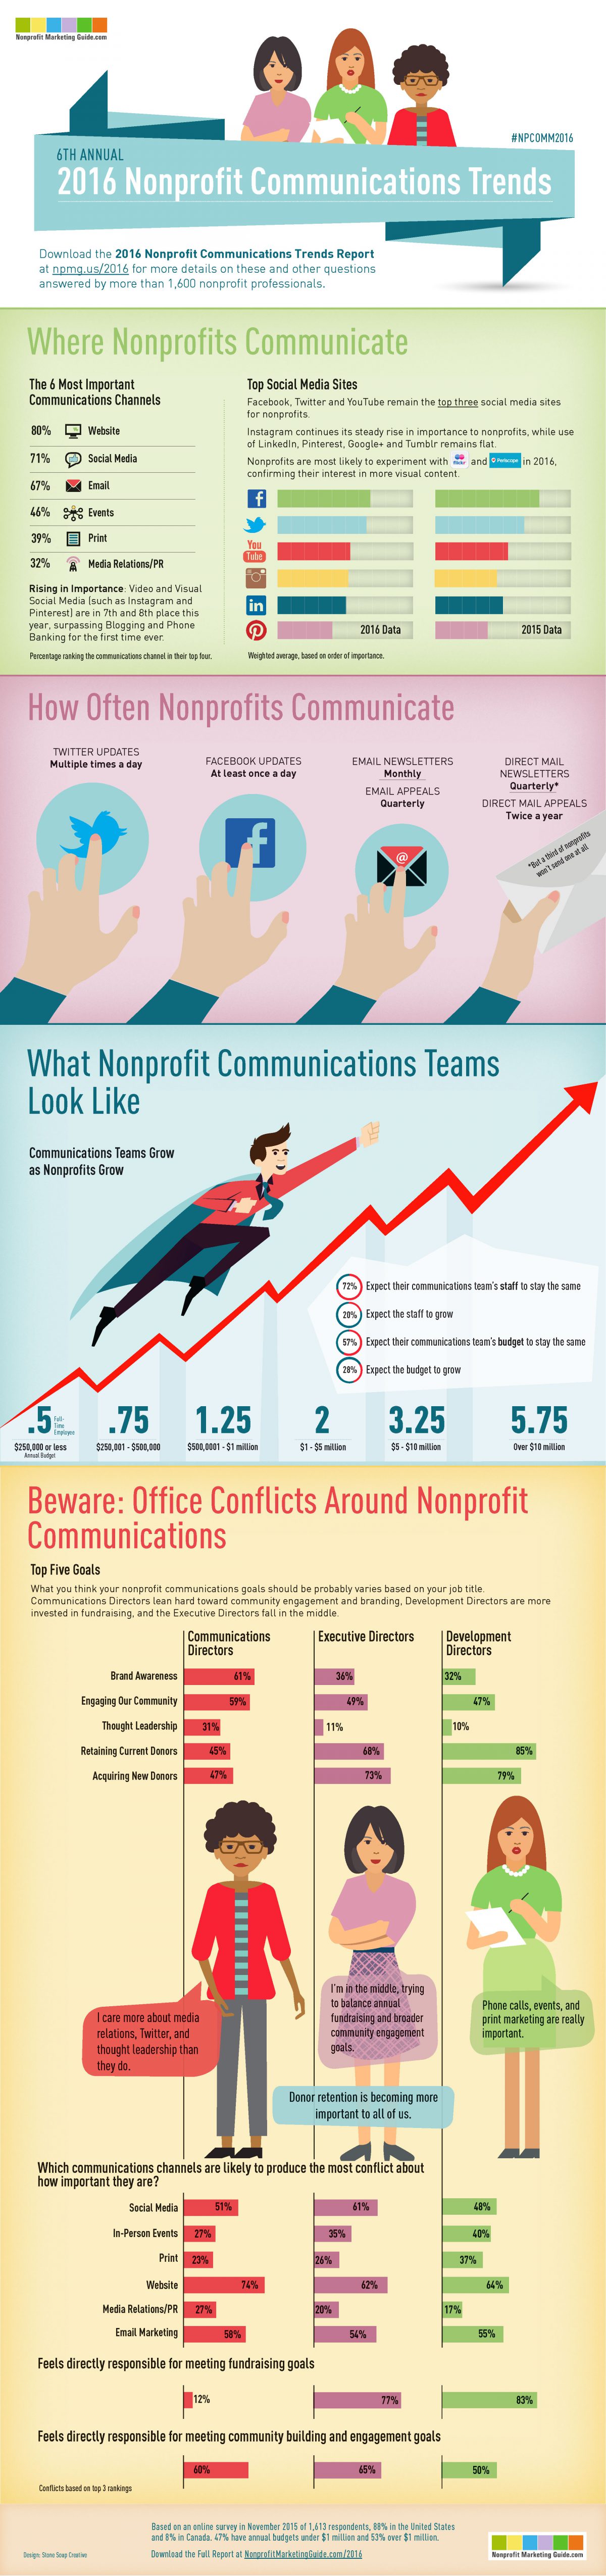 2016 Nonprofit Communications Trends Report Info